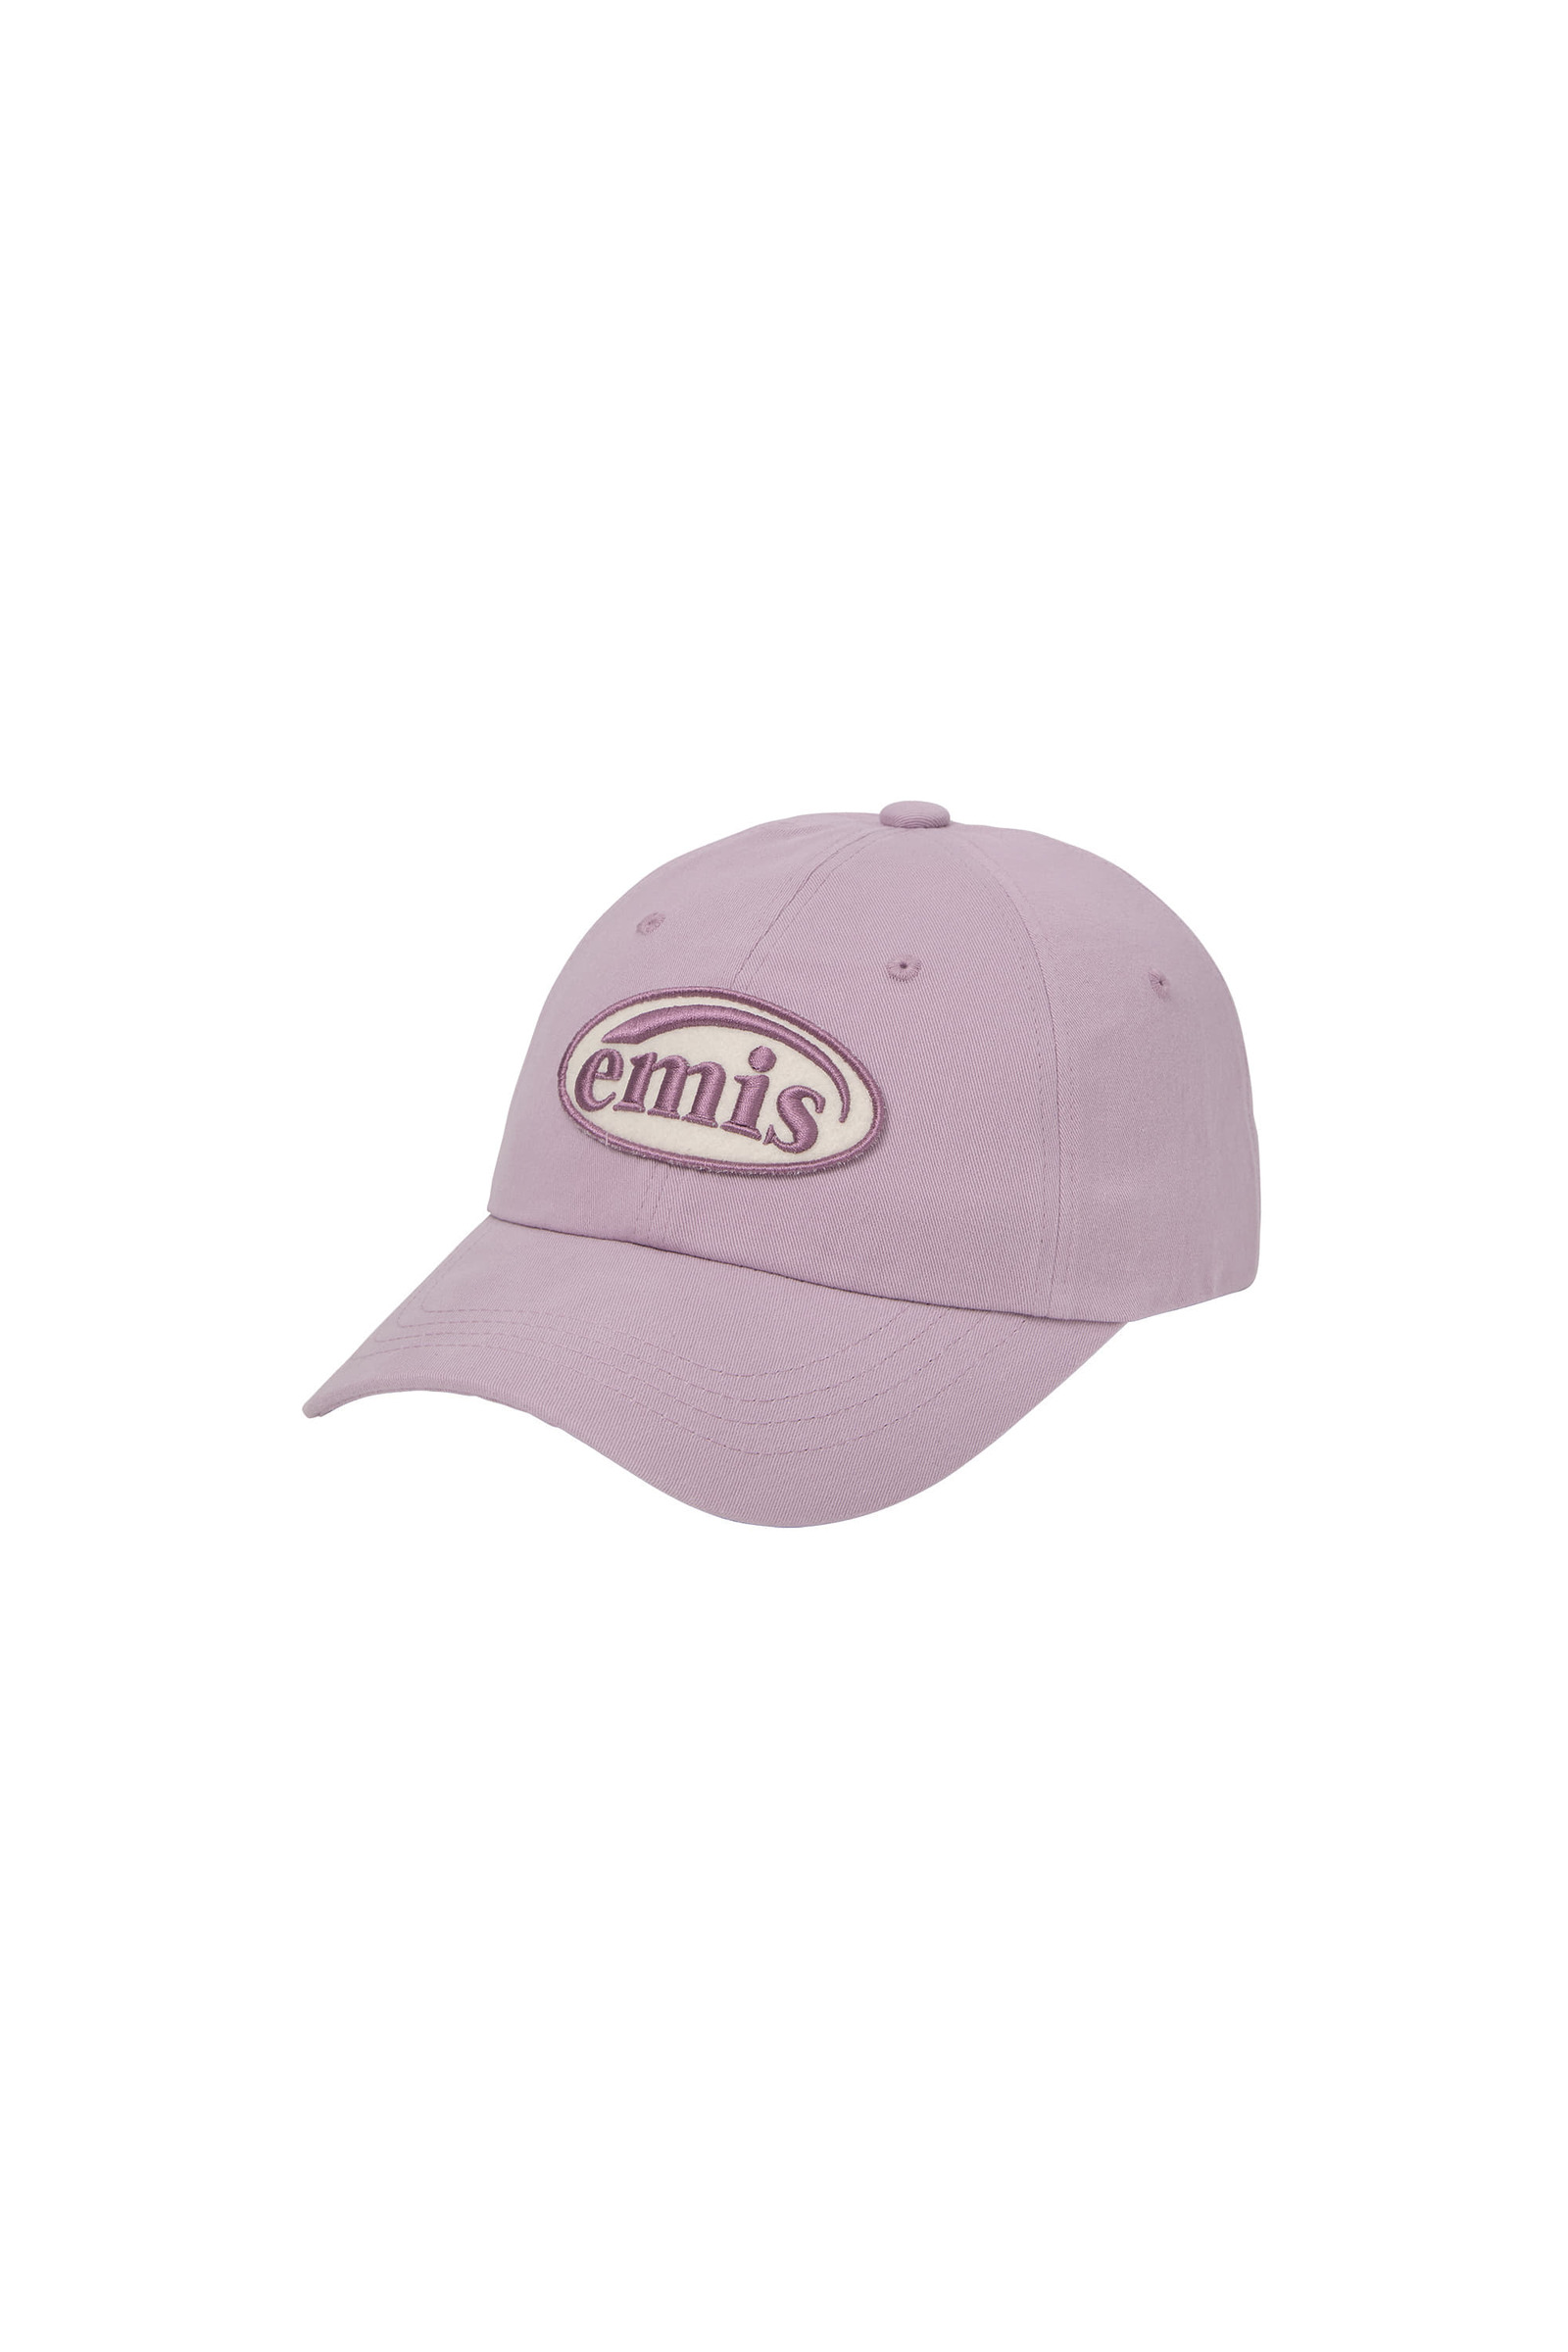 EMIS Tone On Tone Wappen Ball Cap (Light Purple) *Ready Stock*